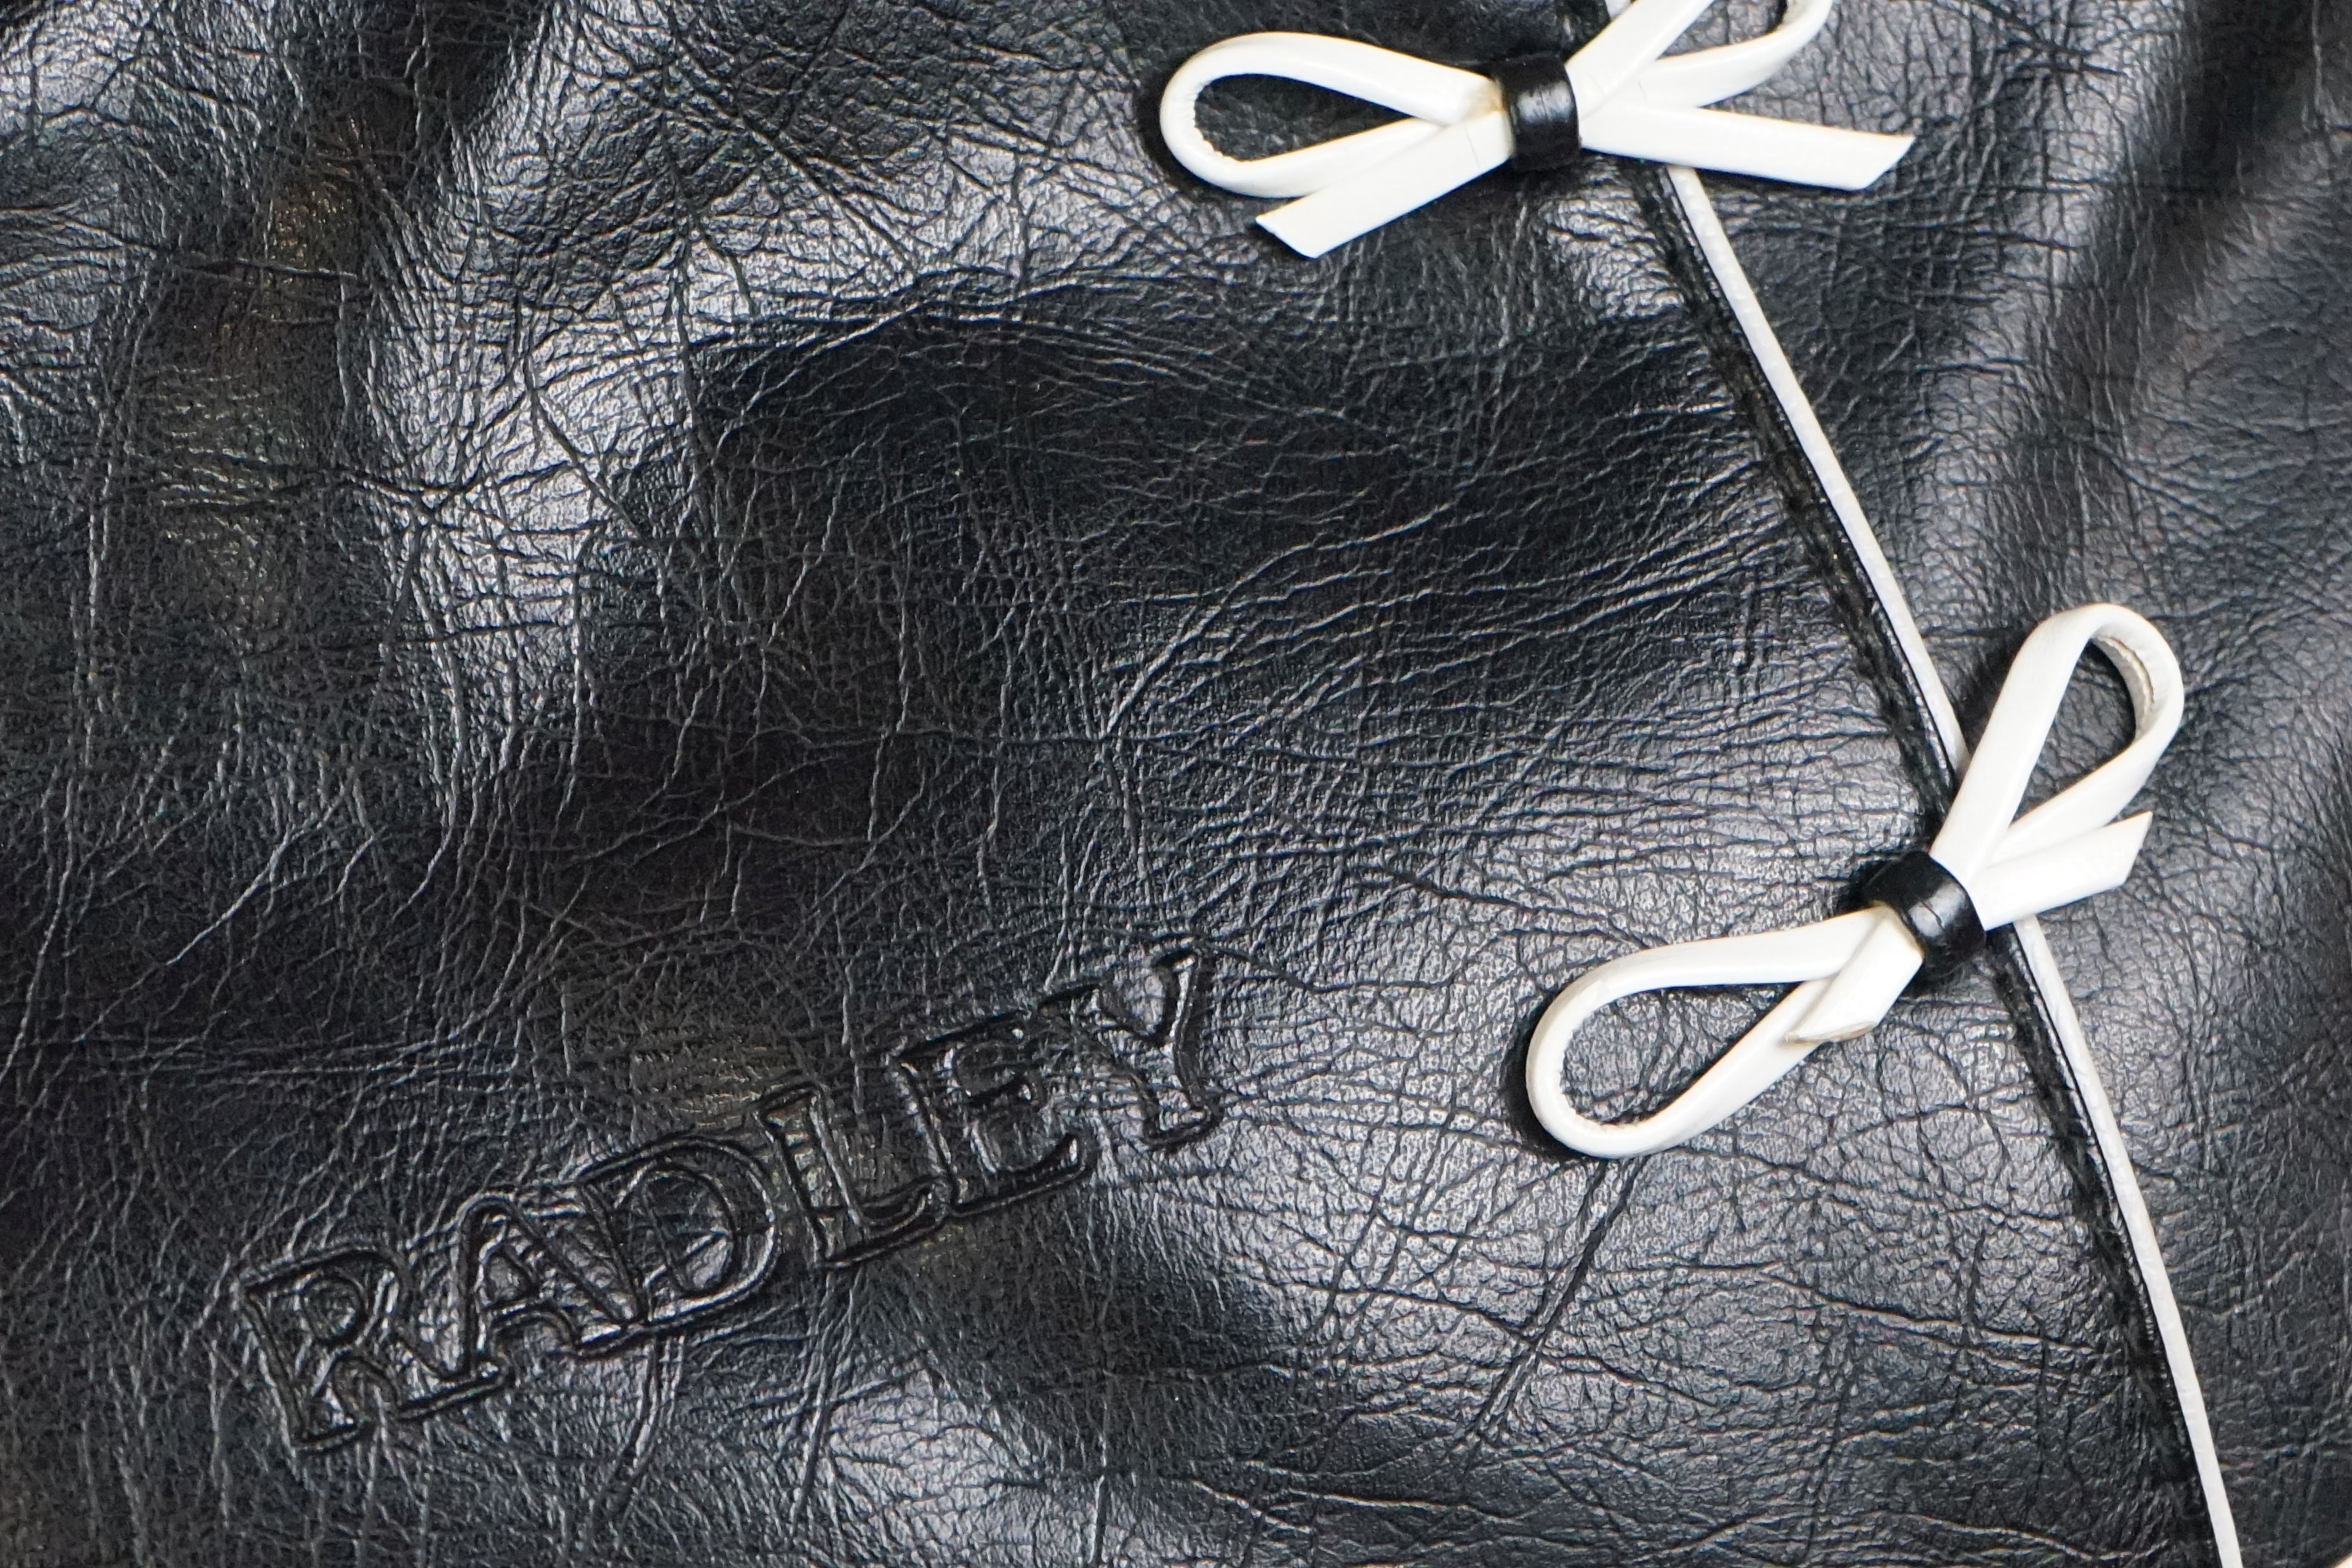 A black Radley handbag with white bow detailing, white Radley dog and pink dust bag. - Image 3 of 7